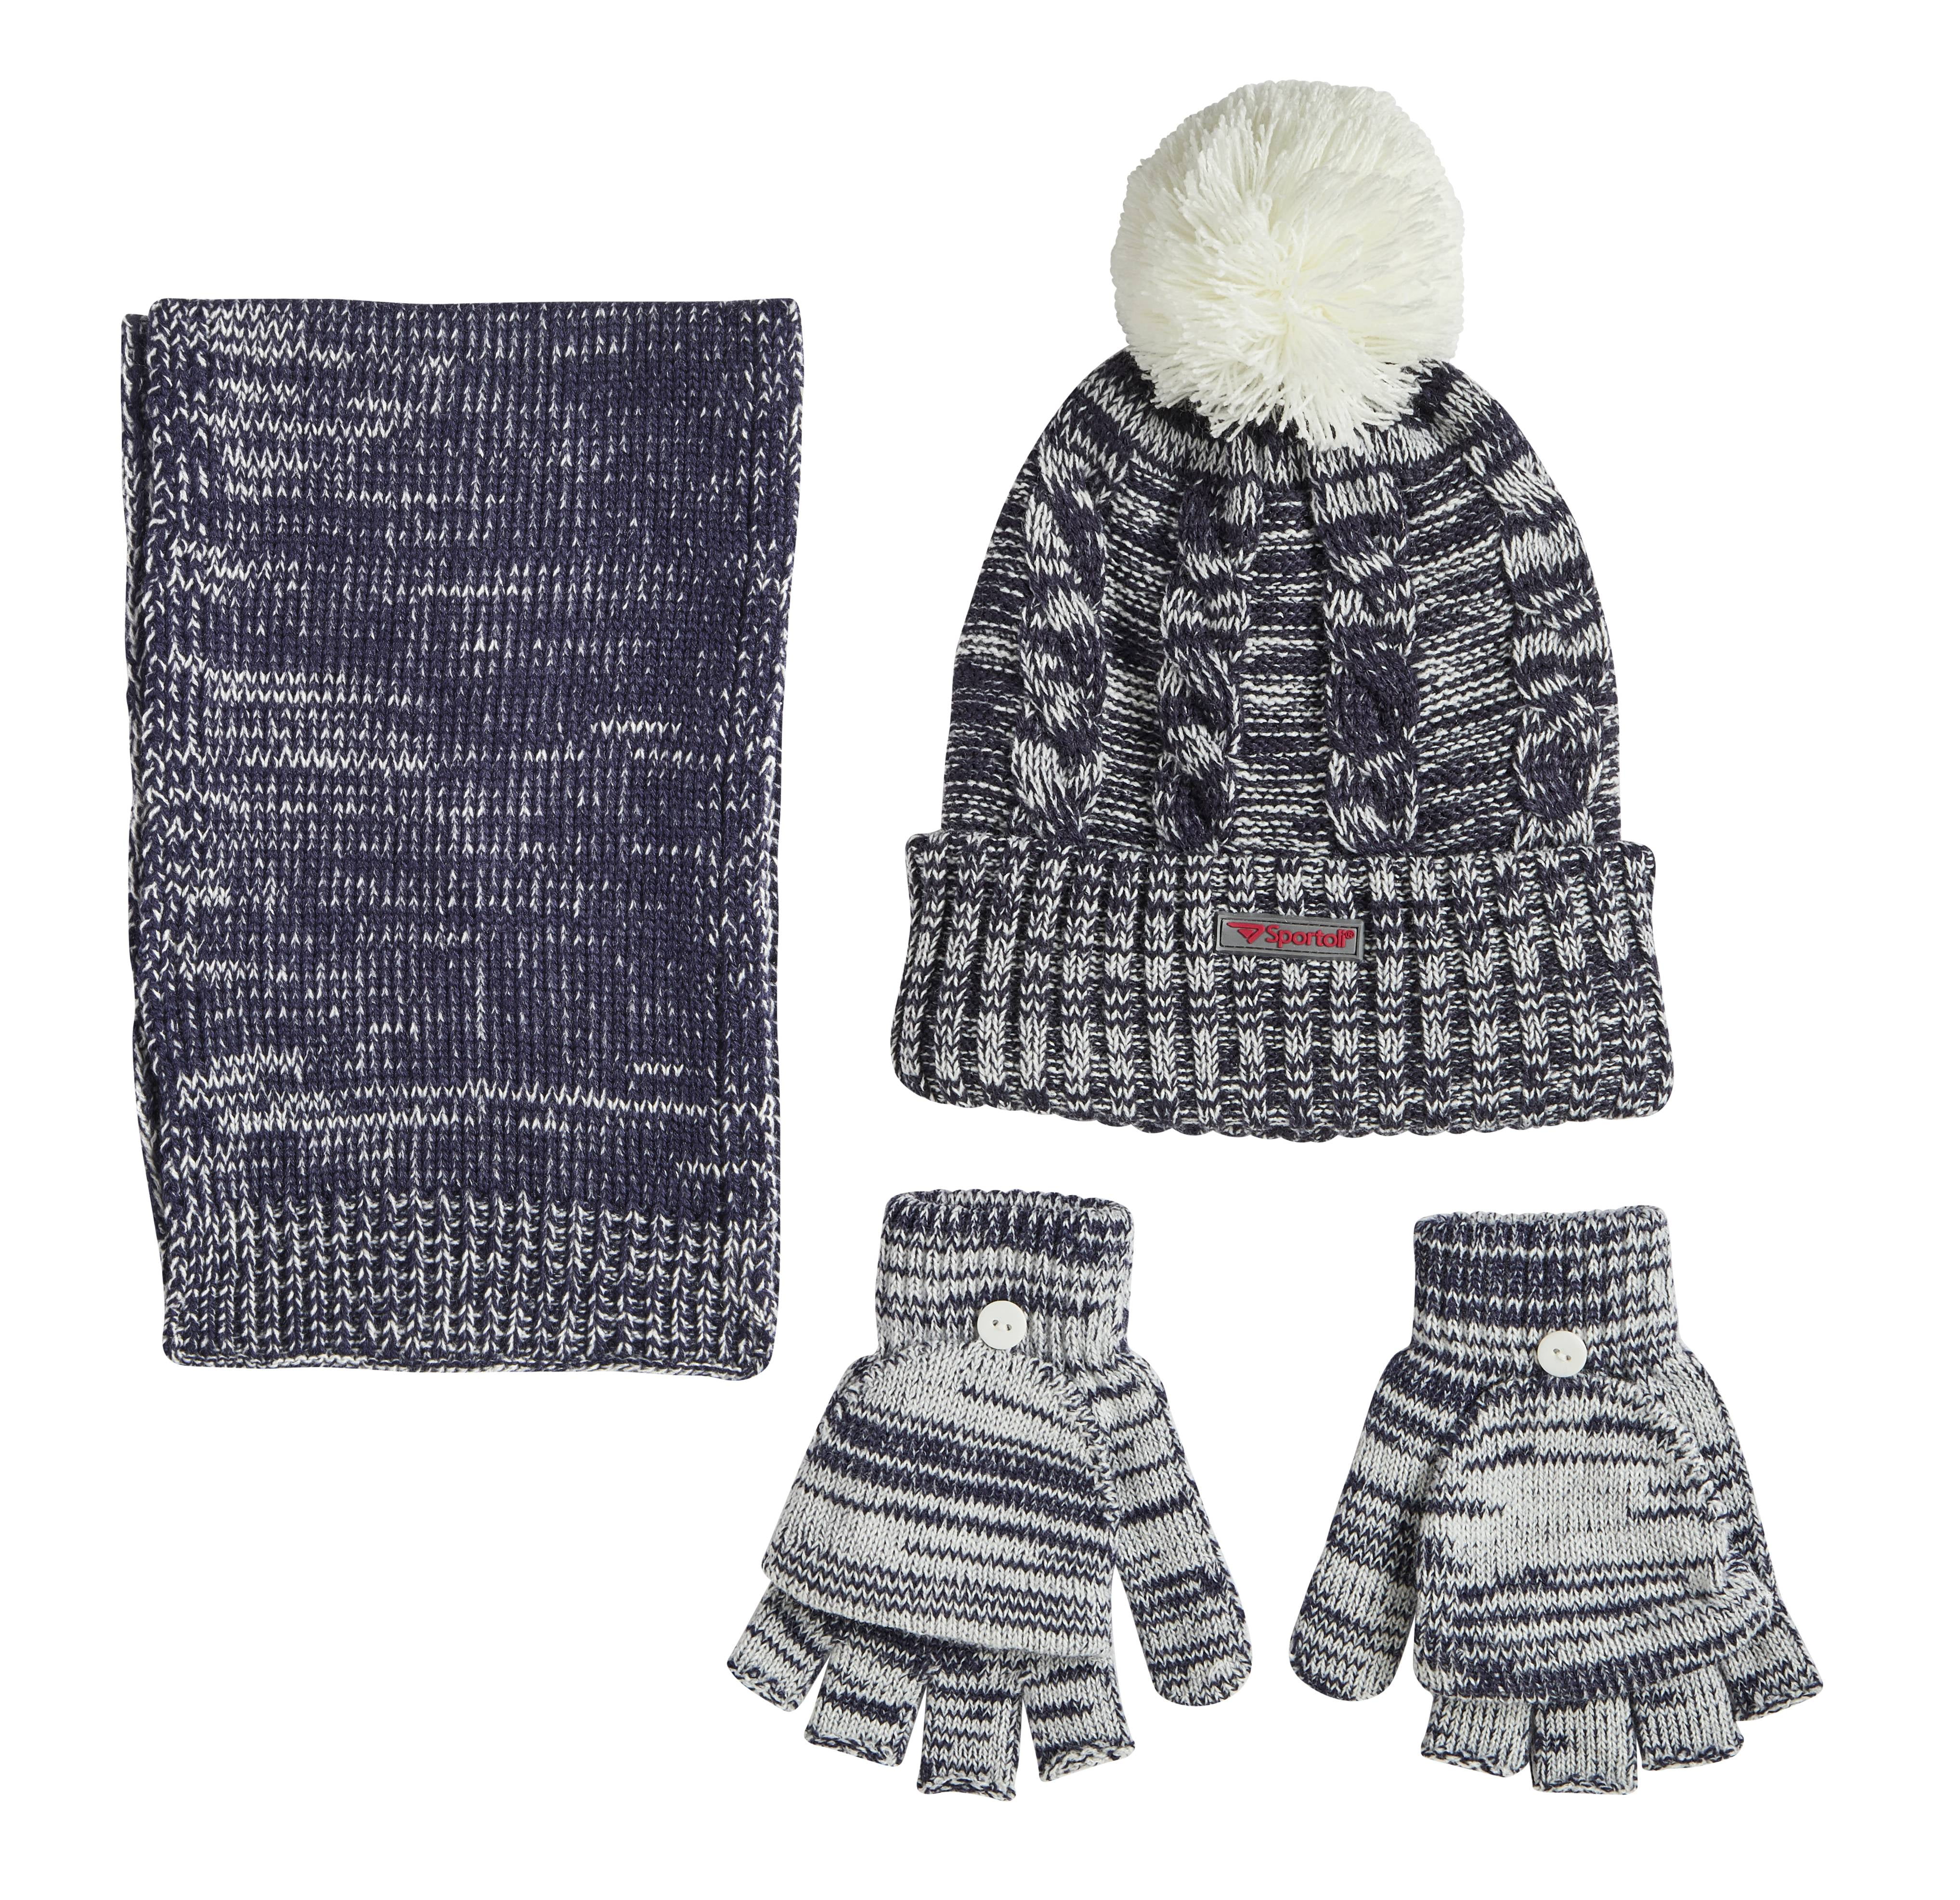 Sportoli Women’s Girls’ kids 3-Piece Cable Knit Cold Weather Set Hat Scarf Glove